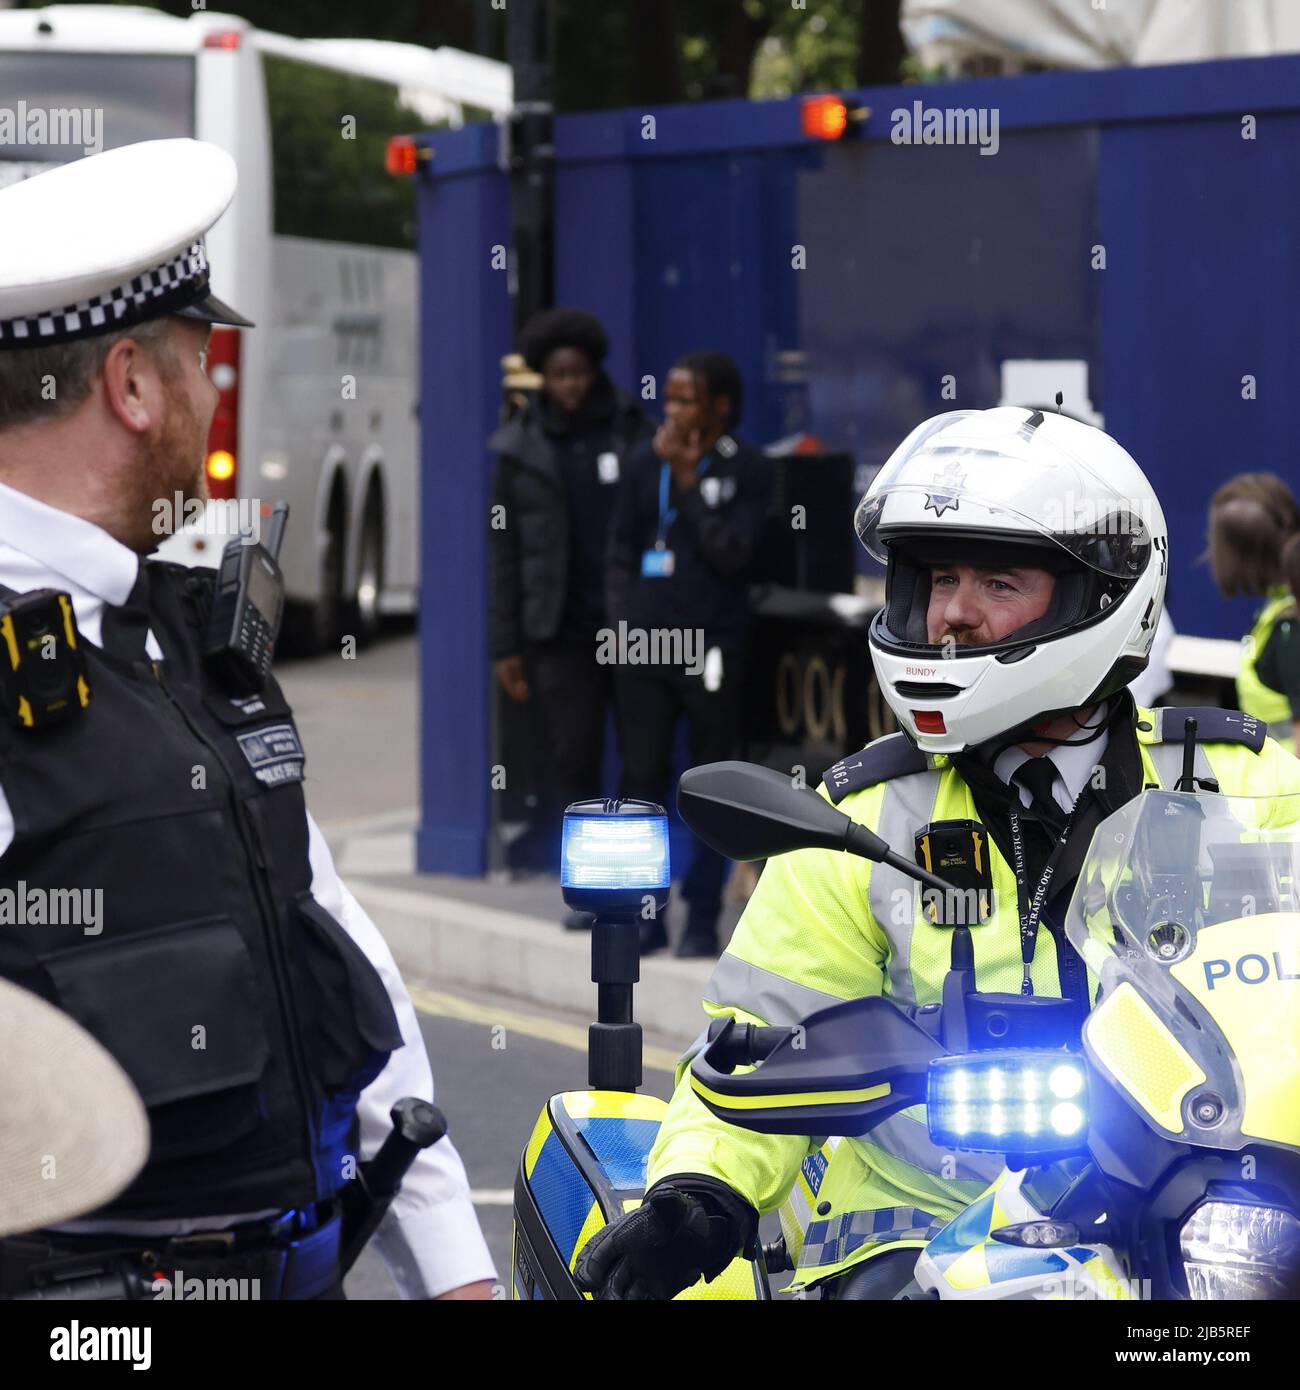 Metropolitan Police Motorcycle Escort for the Platinum Jubilee visitors. Stock Photo